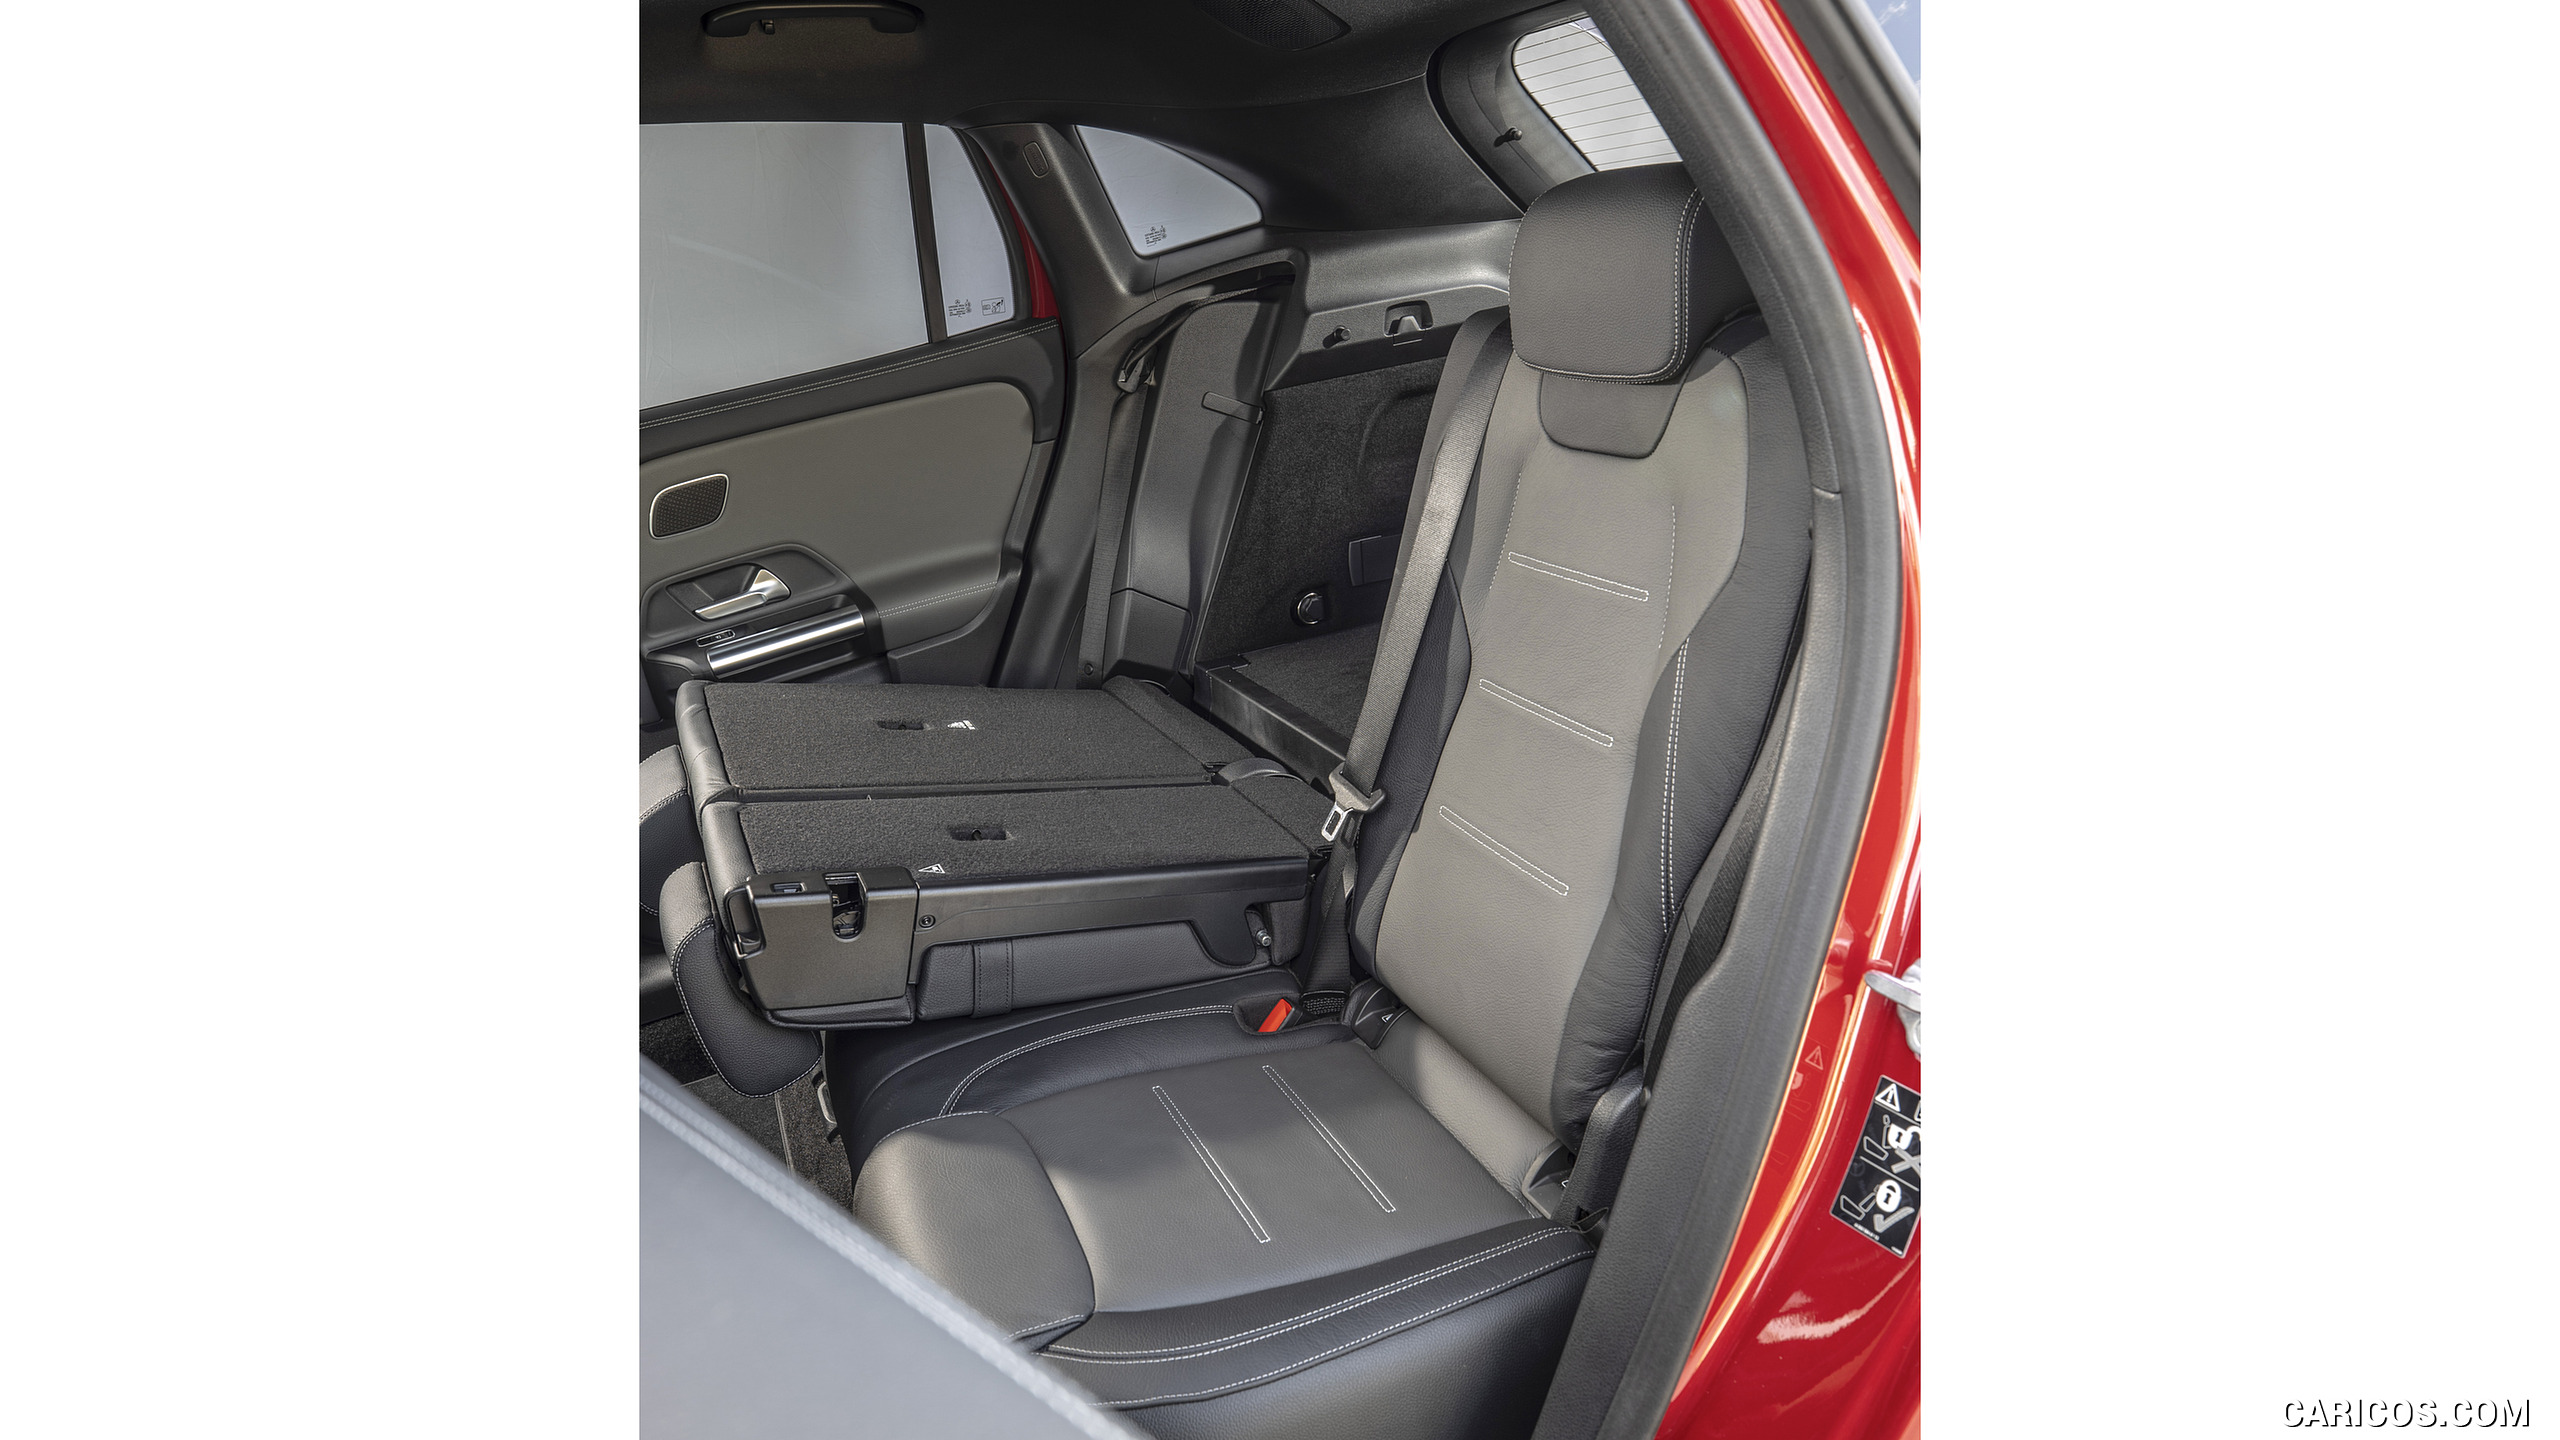 2021 Mercedes-AMG GLA 35 4MATIC - Interior, Rear Seats, #63 of 104